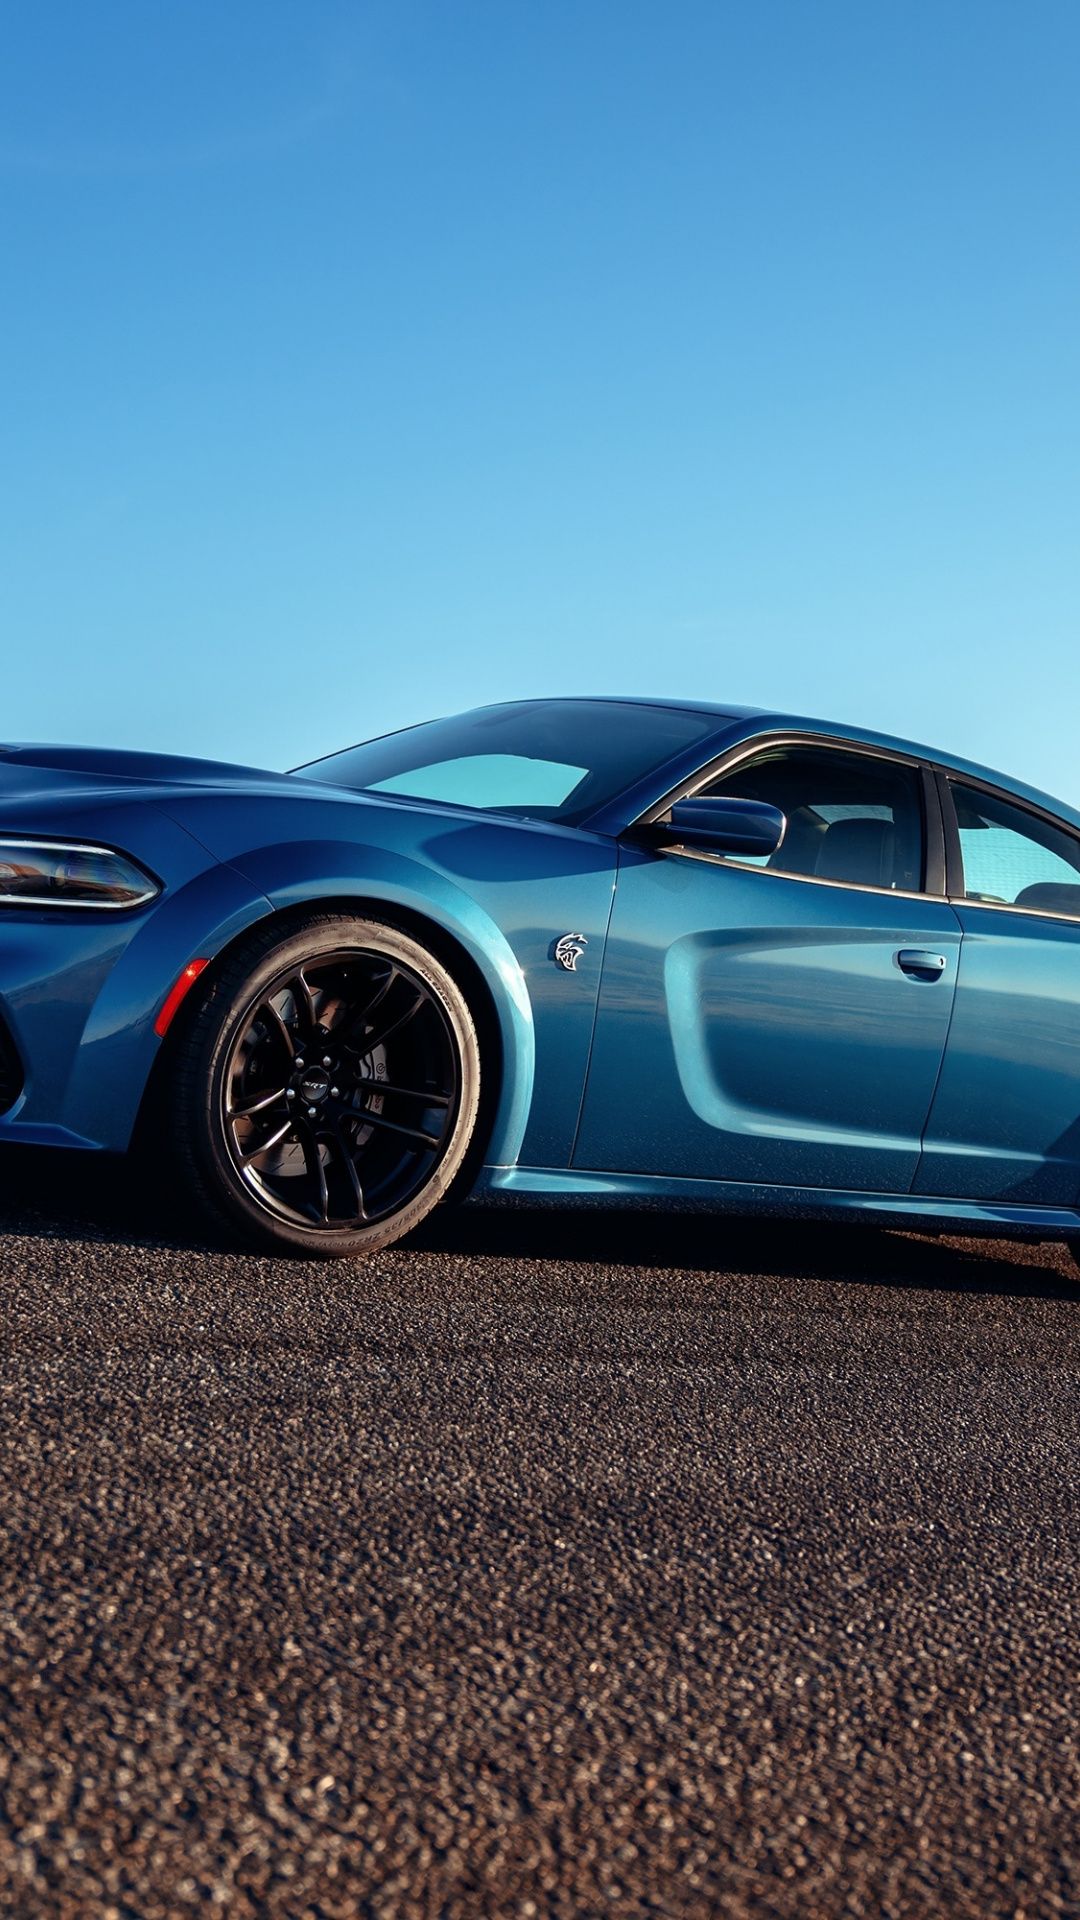 1080x1920 Blue car Dodge Charger SRT Hellcat 2019 wallpaper